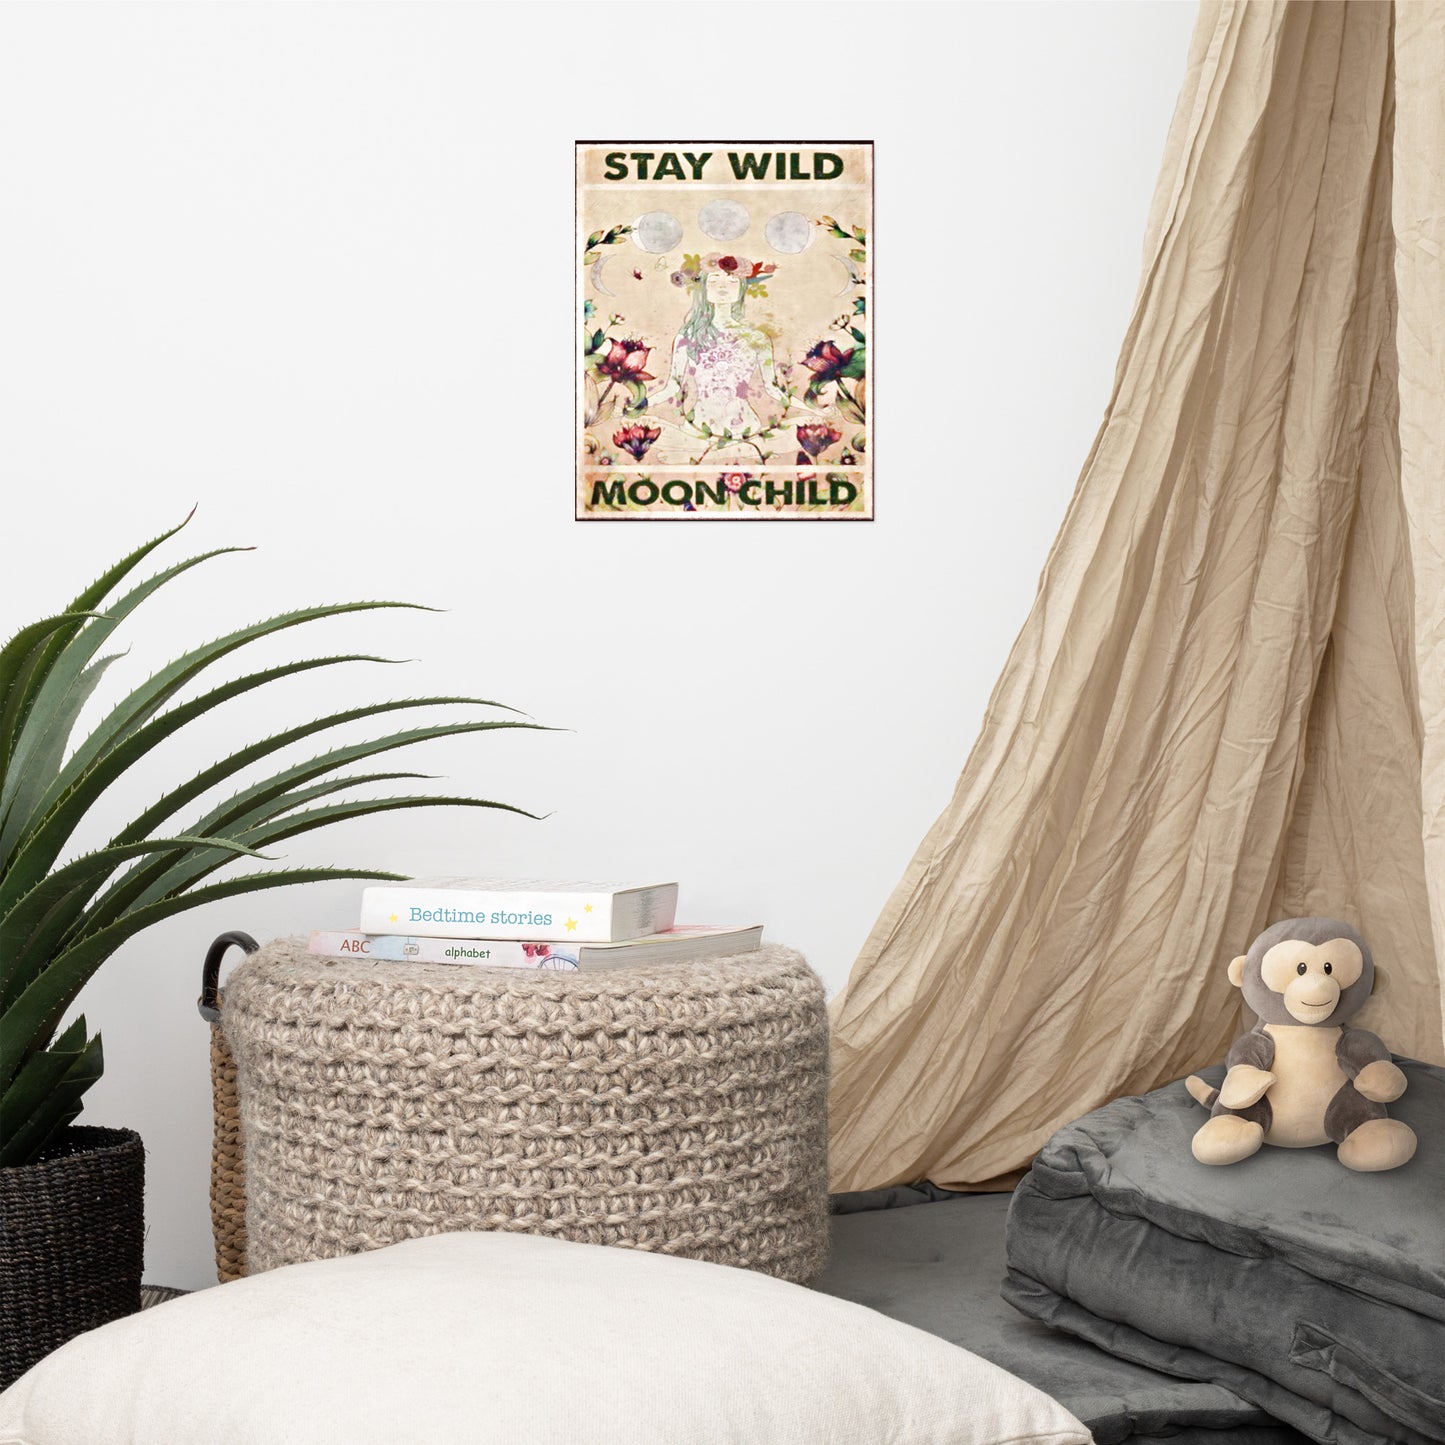 Matt Finish Poster - Stay Wild Moon Child - Yoga Poster in room